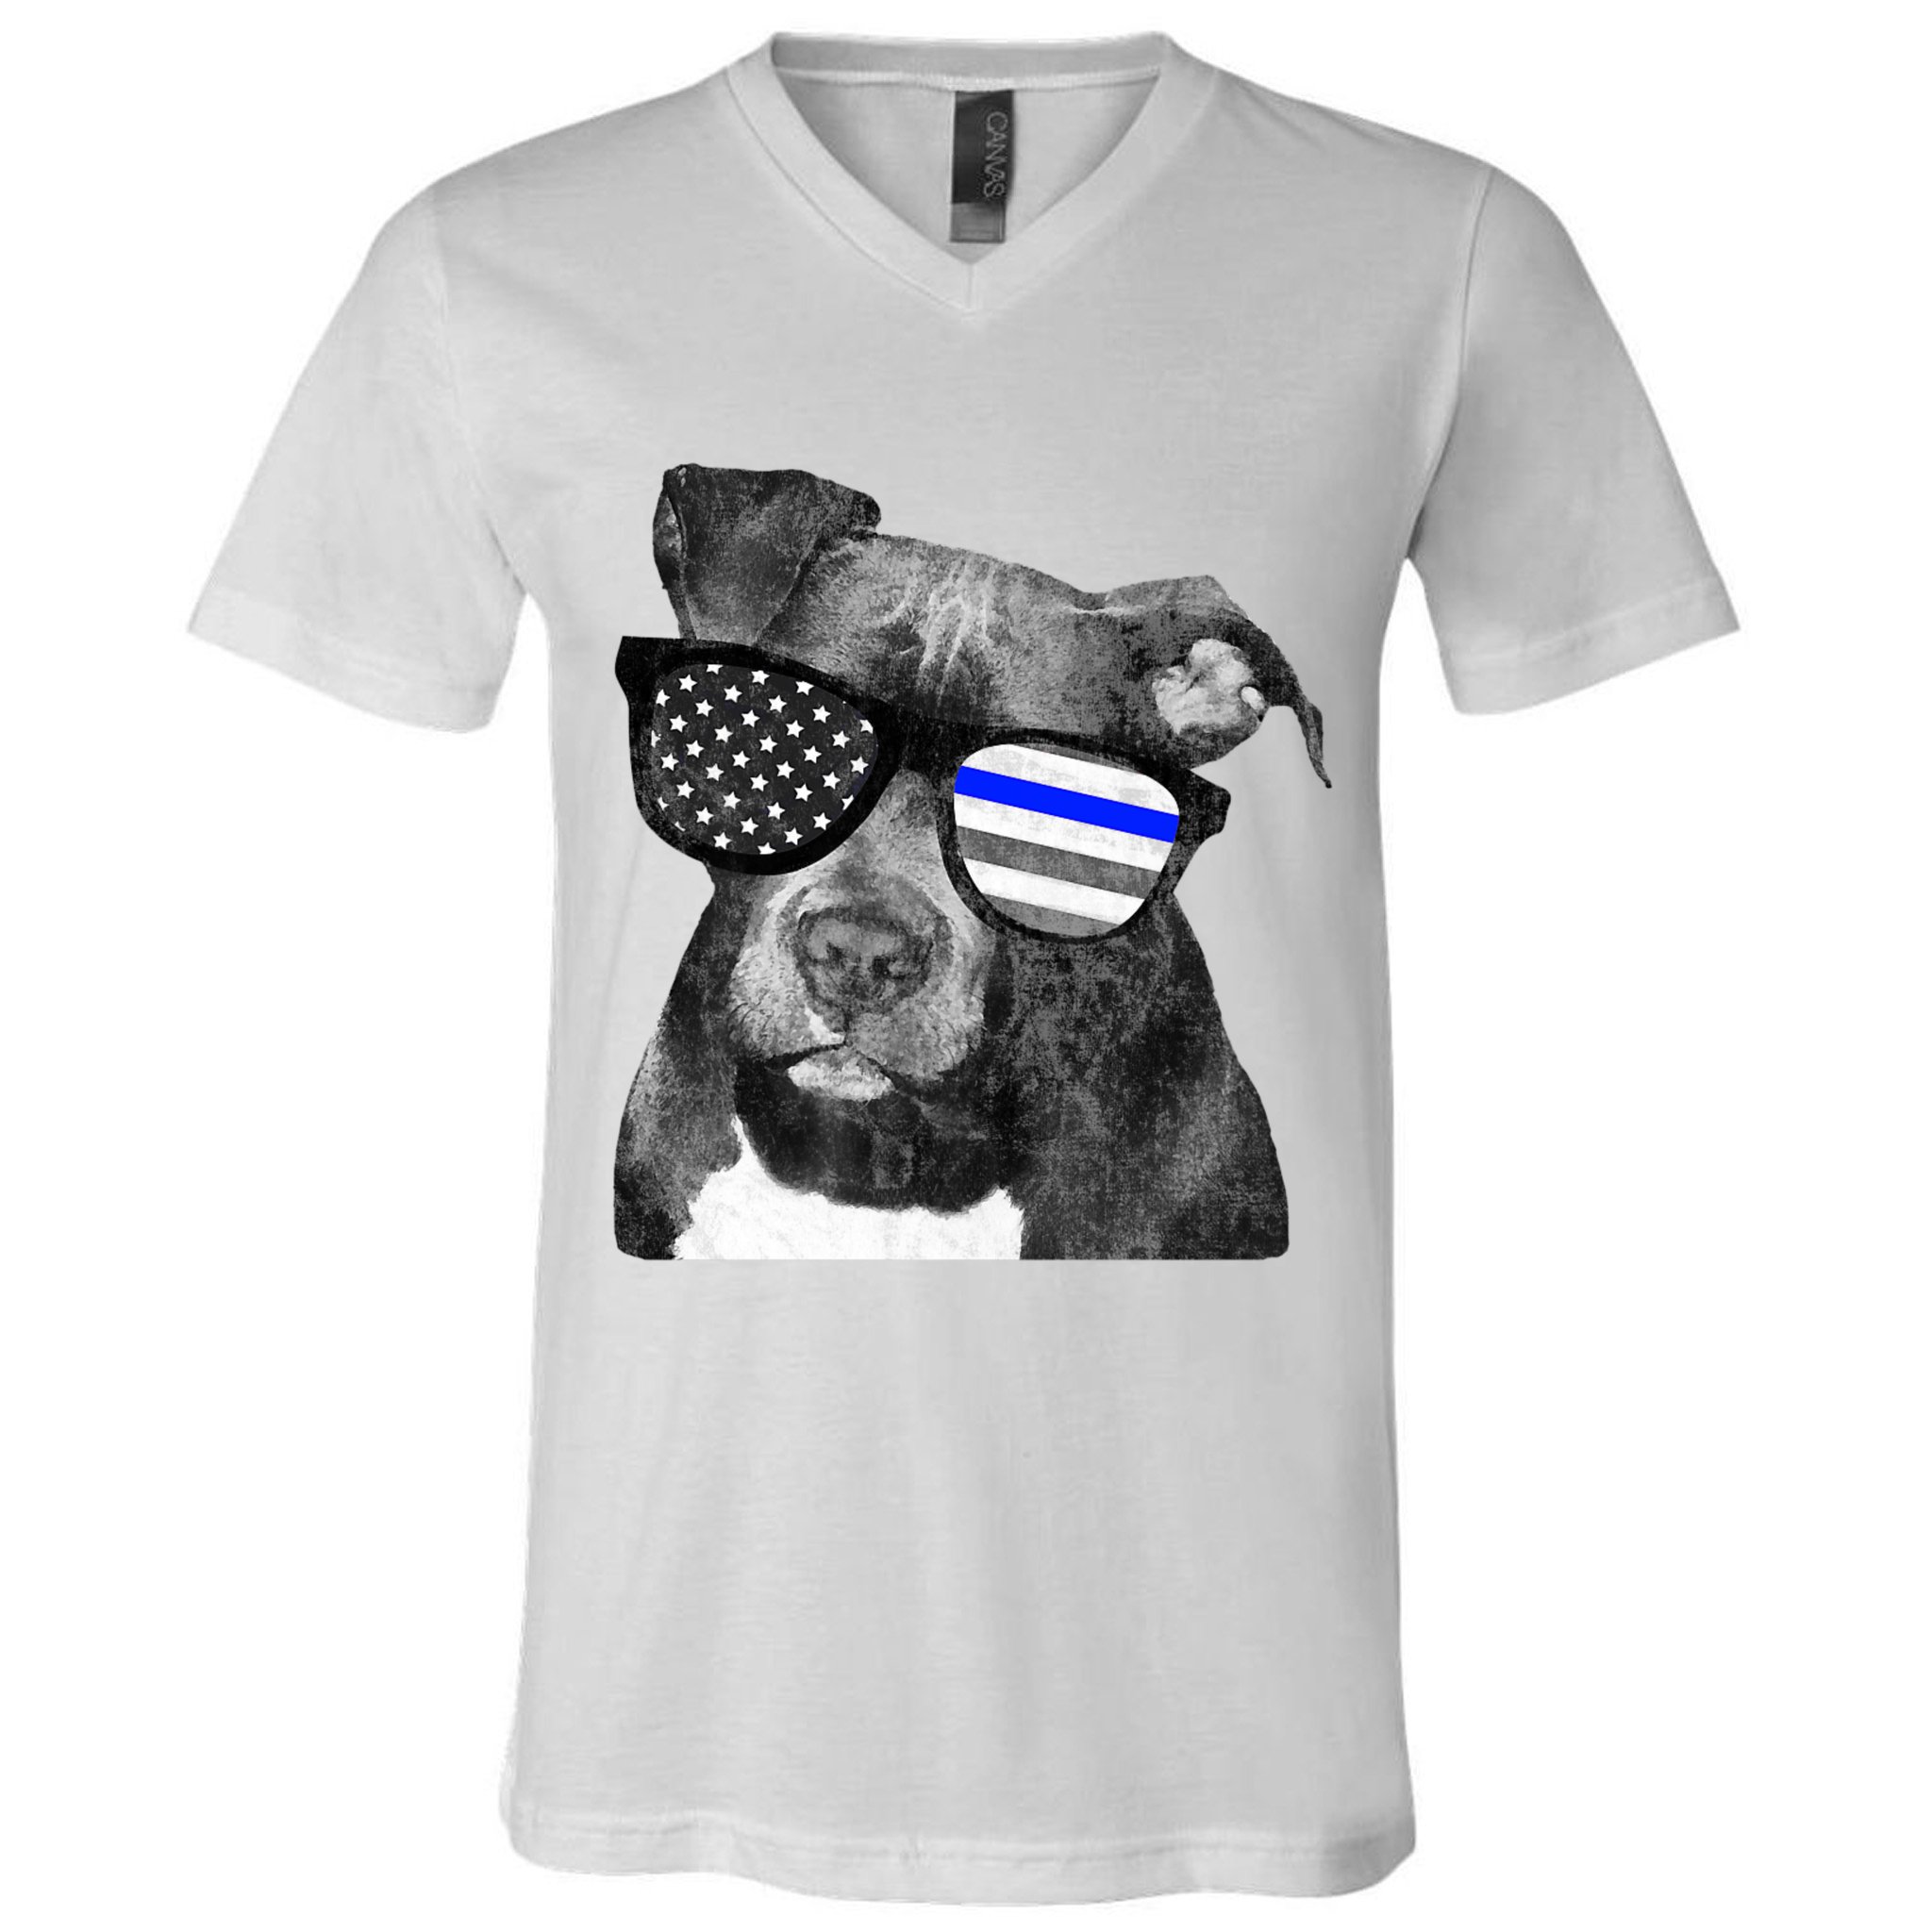 Pitbull design dog white t shirt pit bull top 100% cotton tee graphic  design - mens womens kids & baby sizes